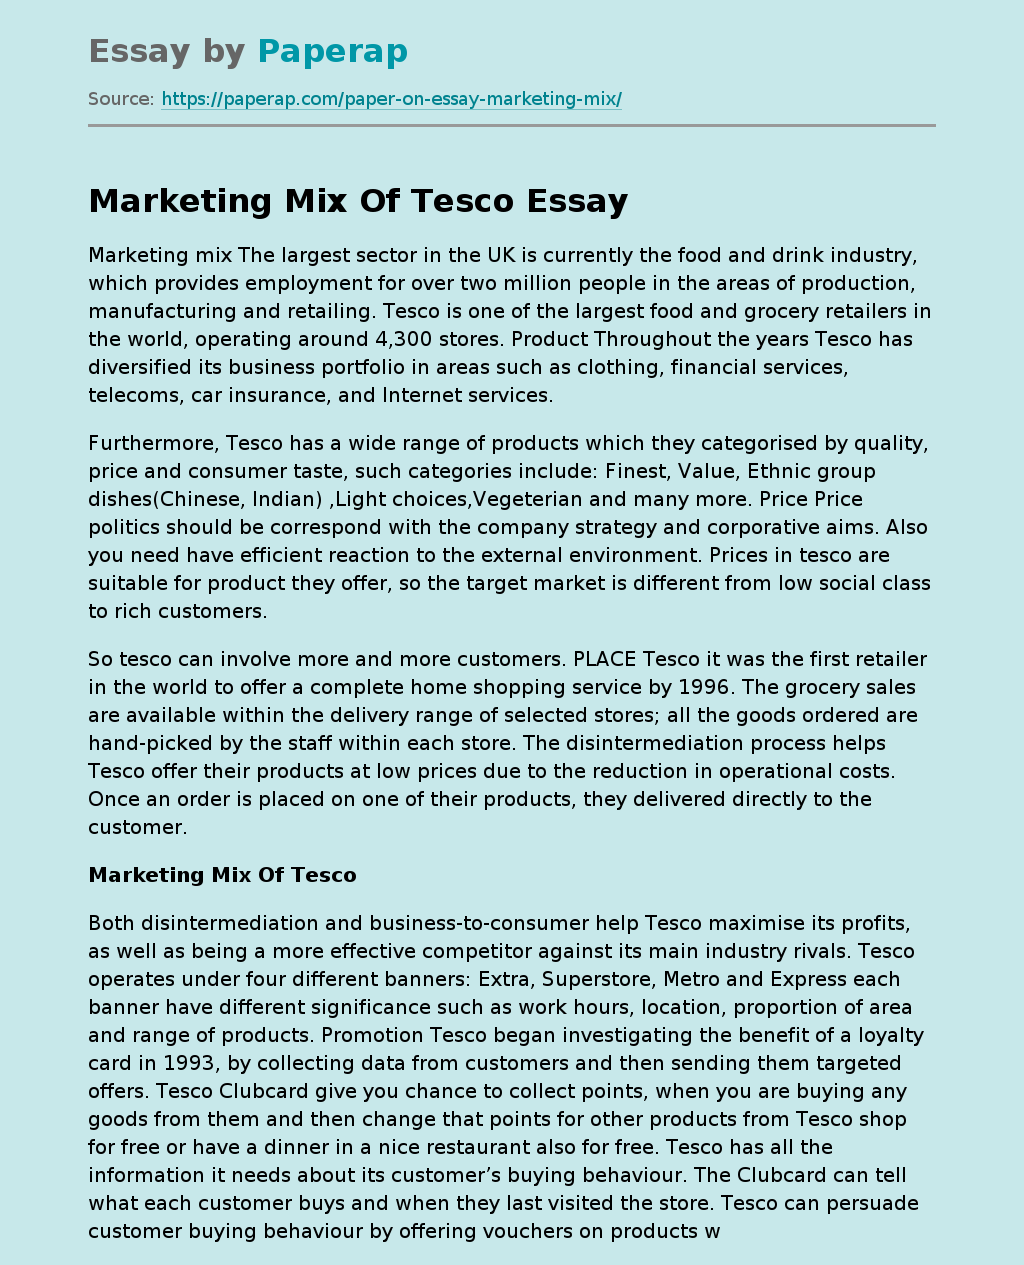 Marketing Mix Of Tesco